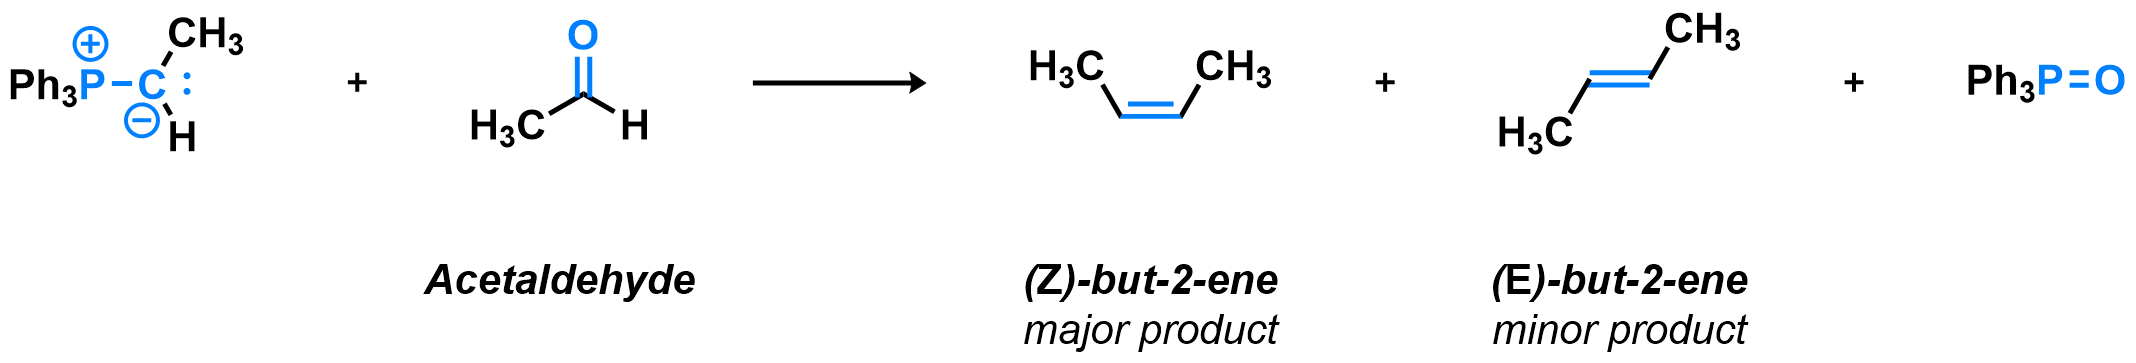 Wittig reaction of acetaldehyde